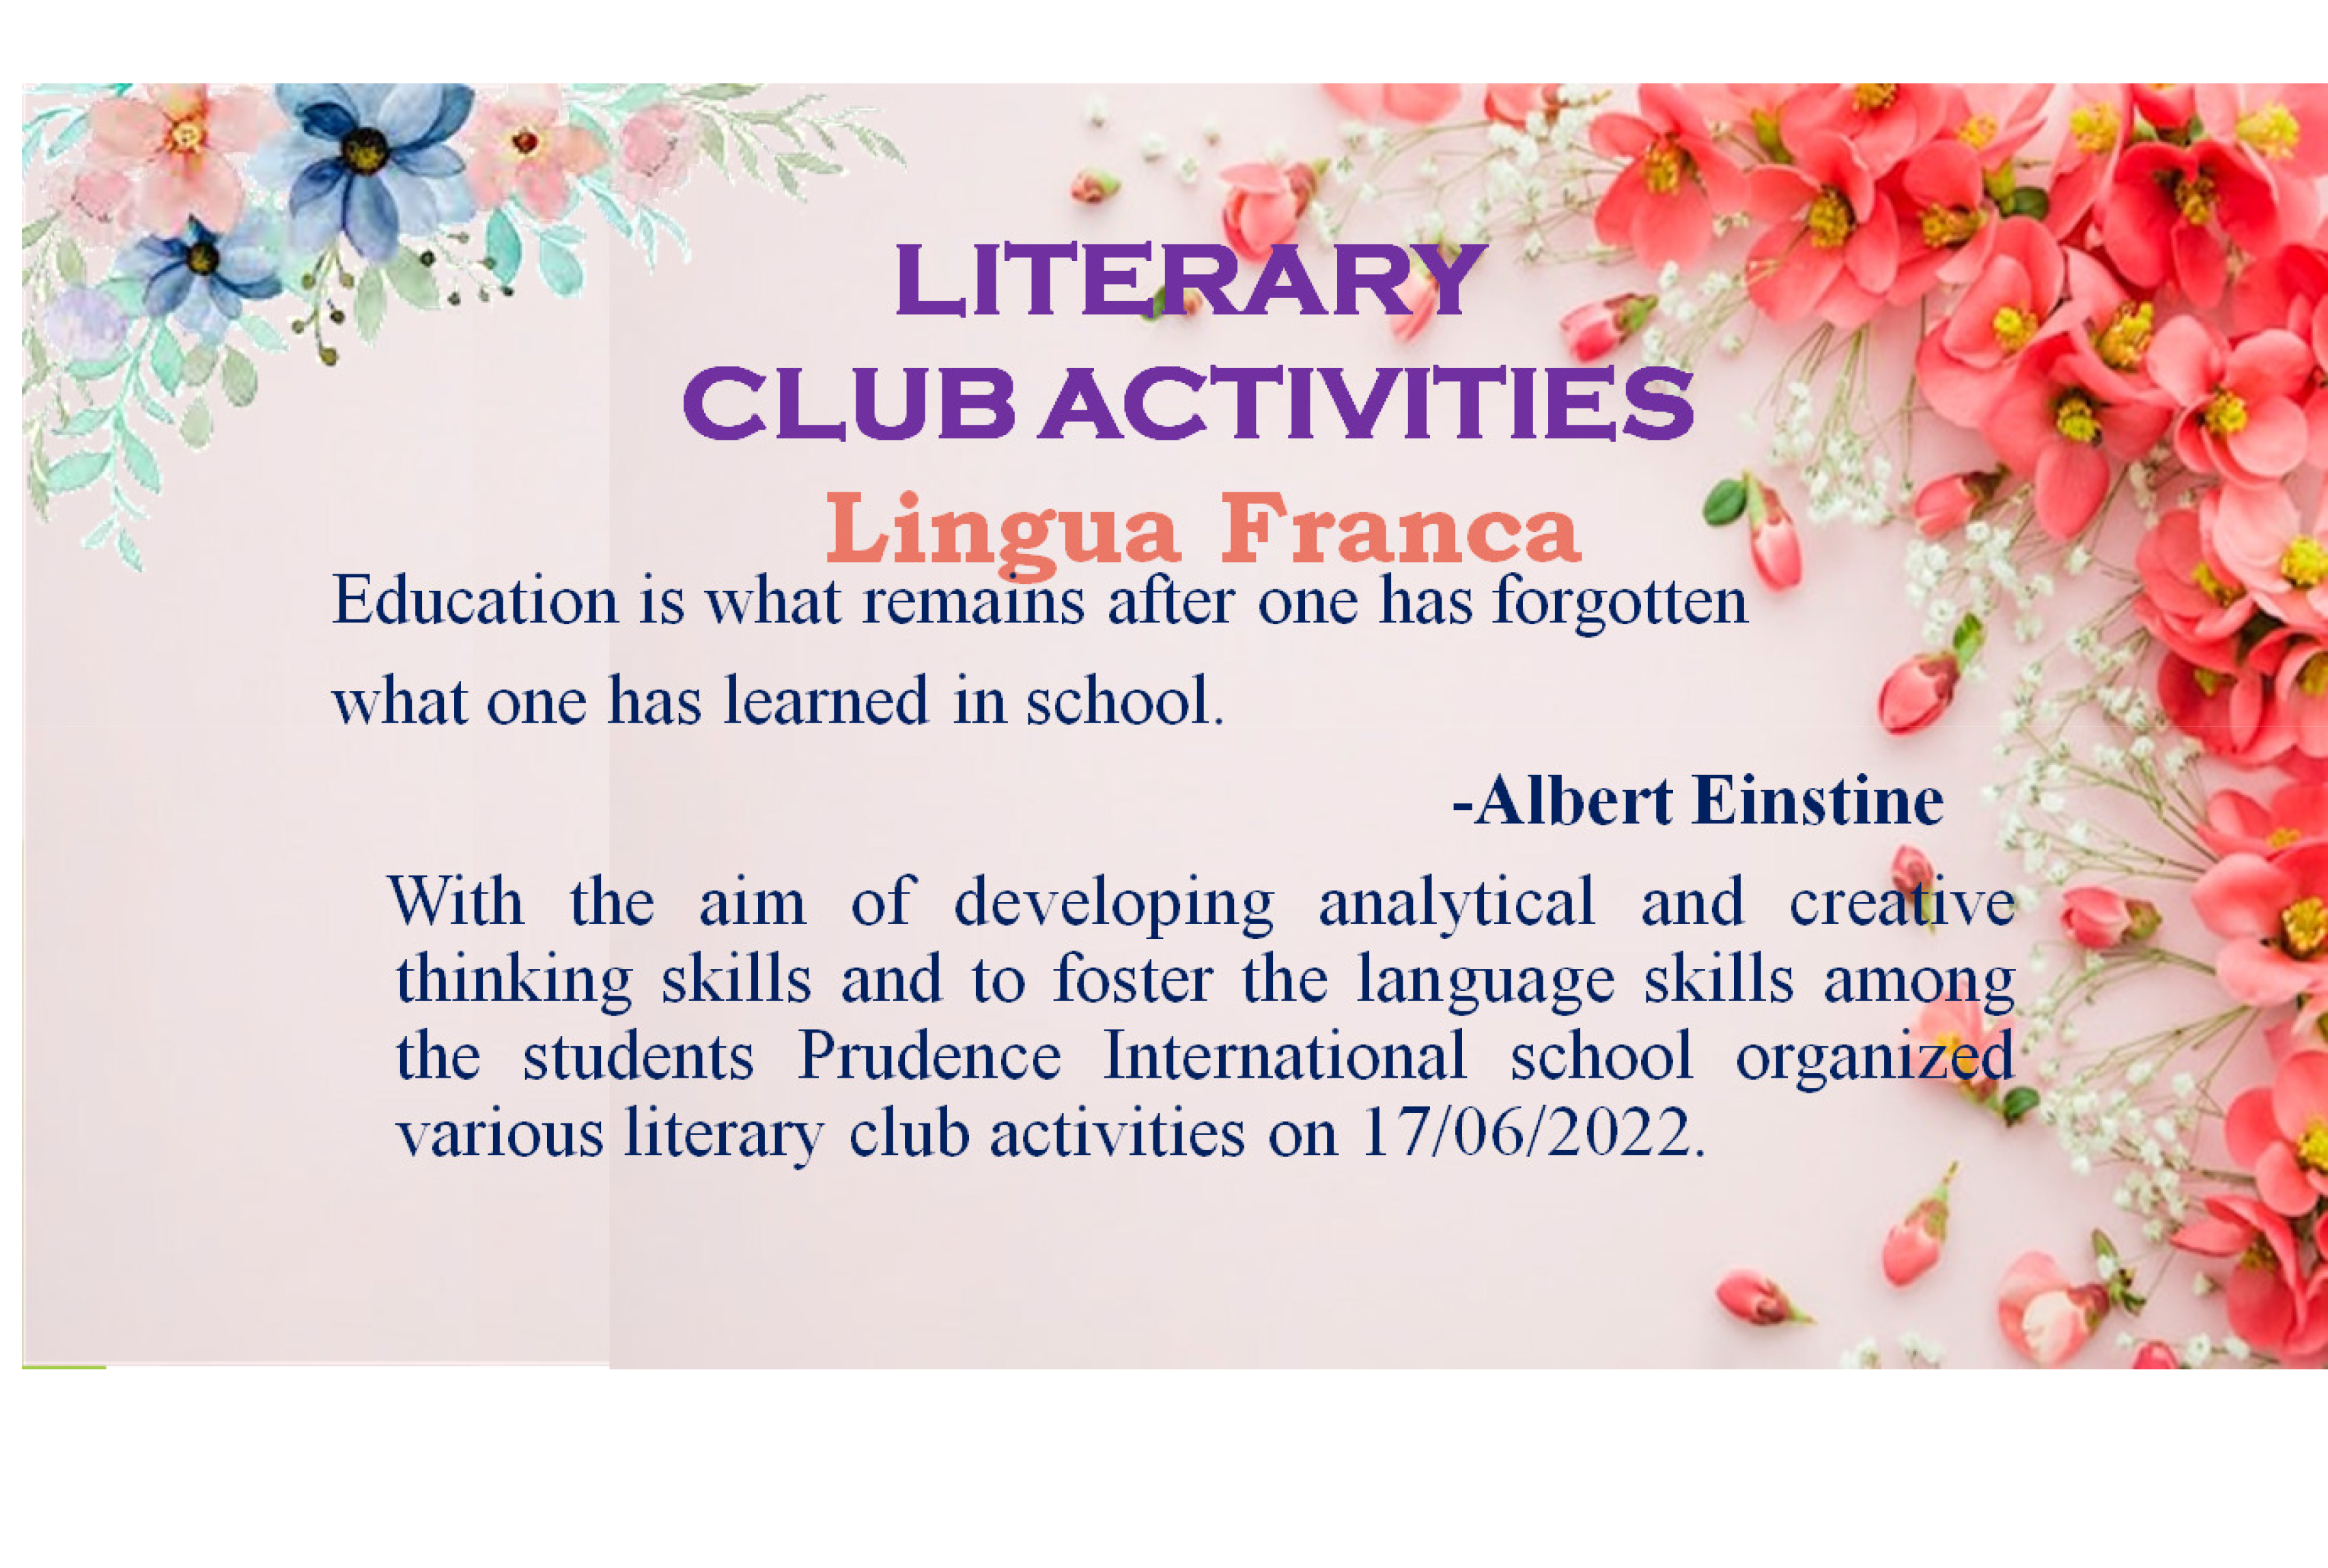 Prudence Literacy Club